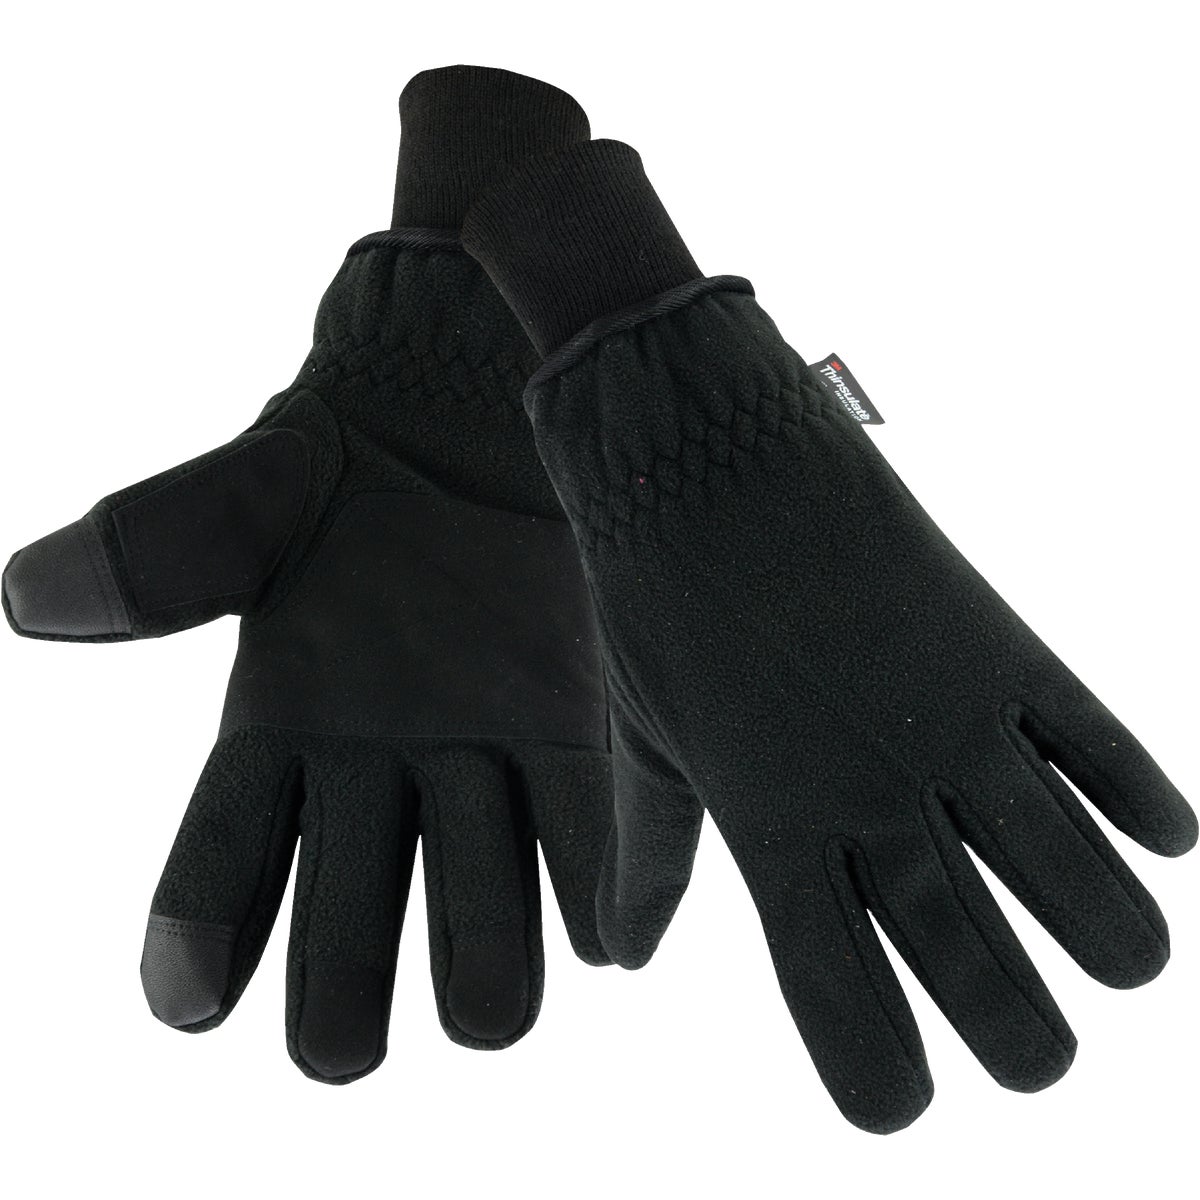 Item 765596, Fleece winter work glove.